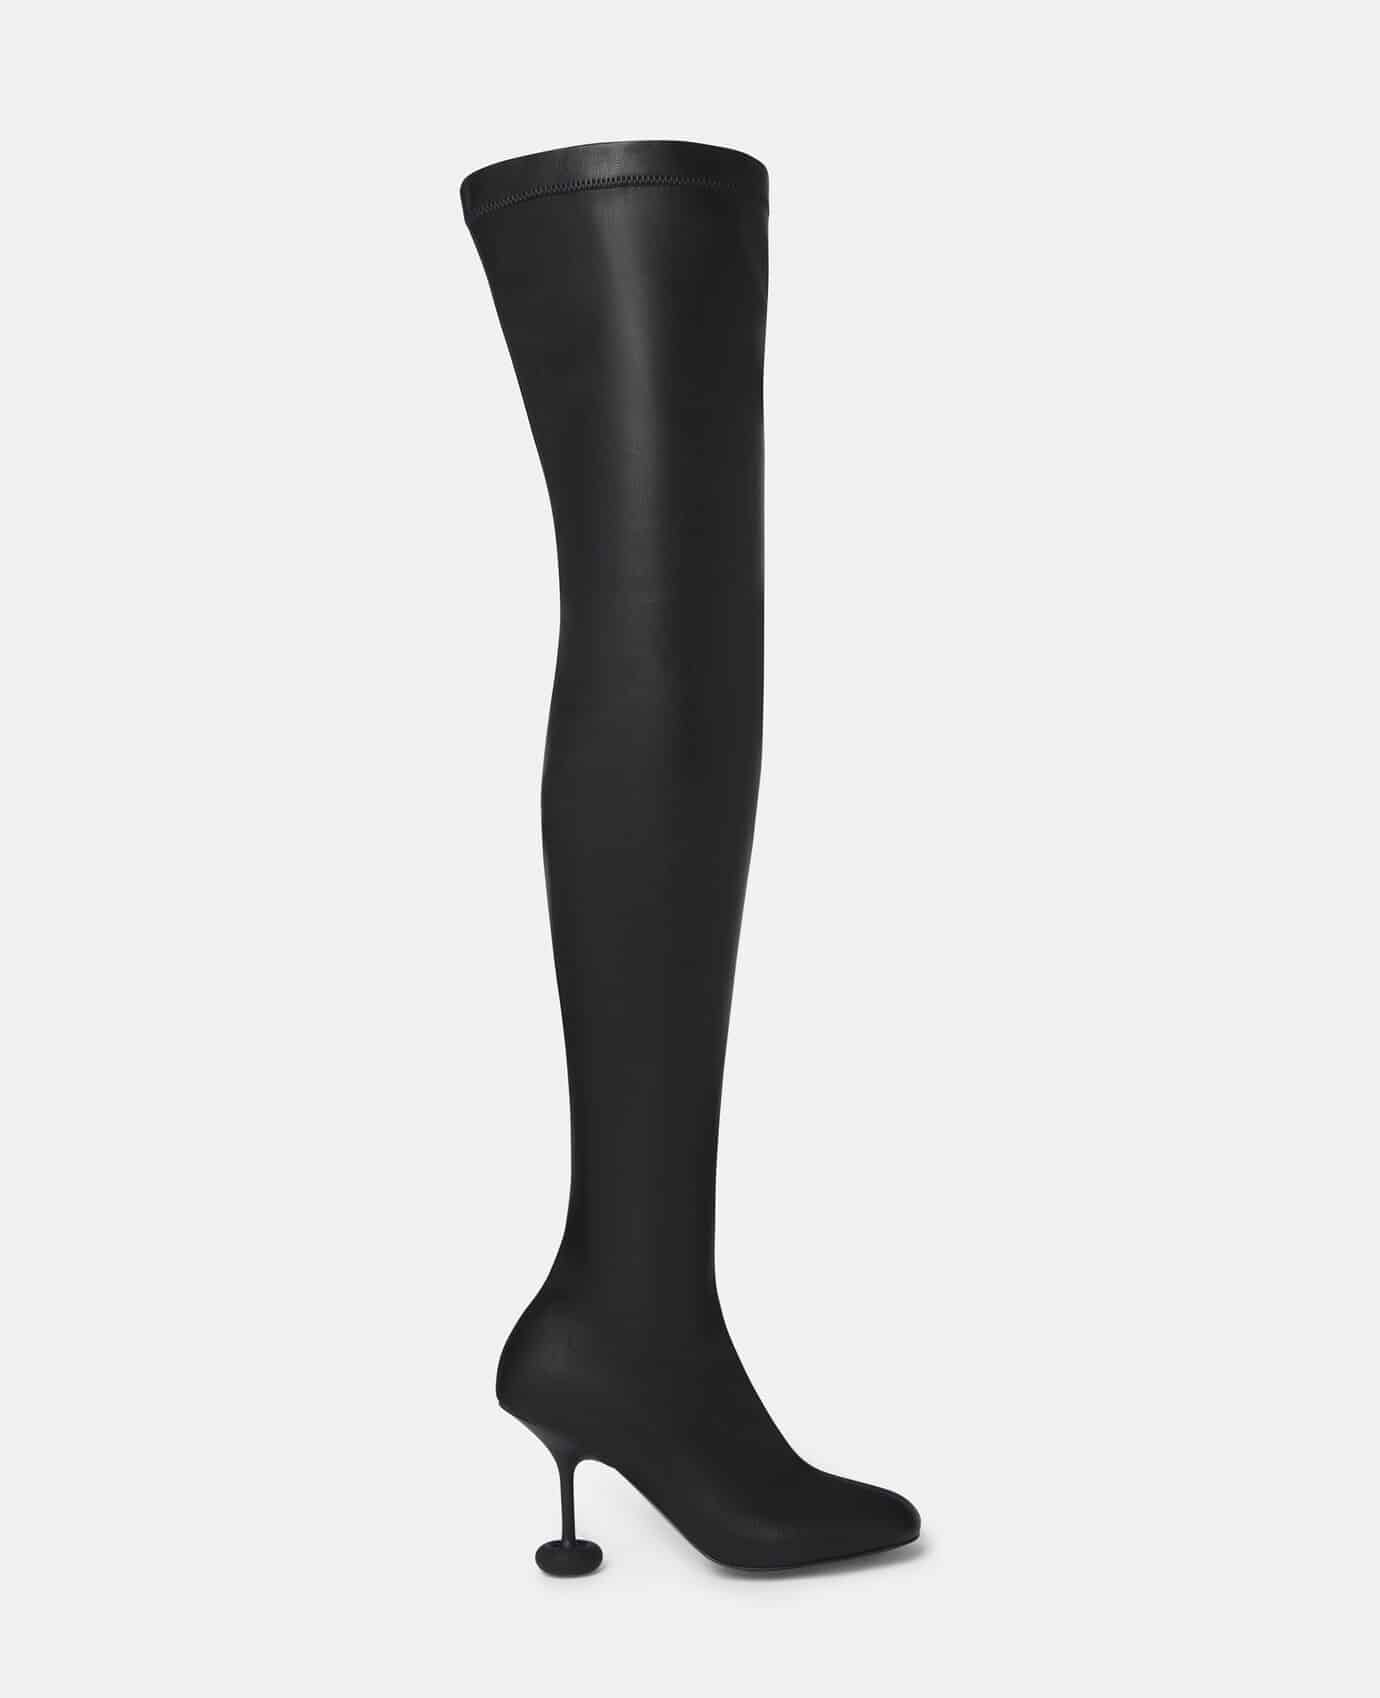 Stiletto heel vegan leather over the knee boots